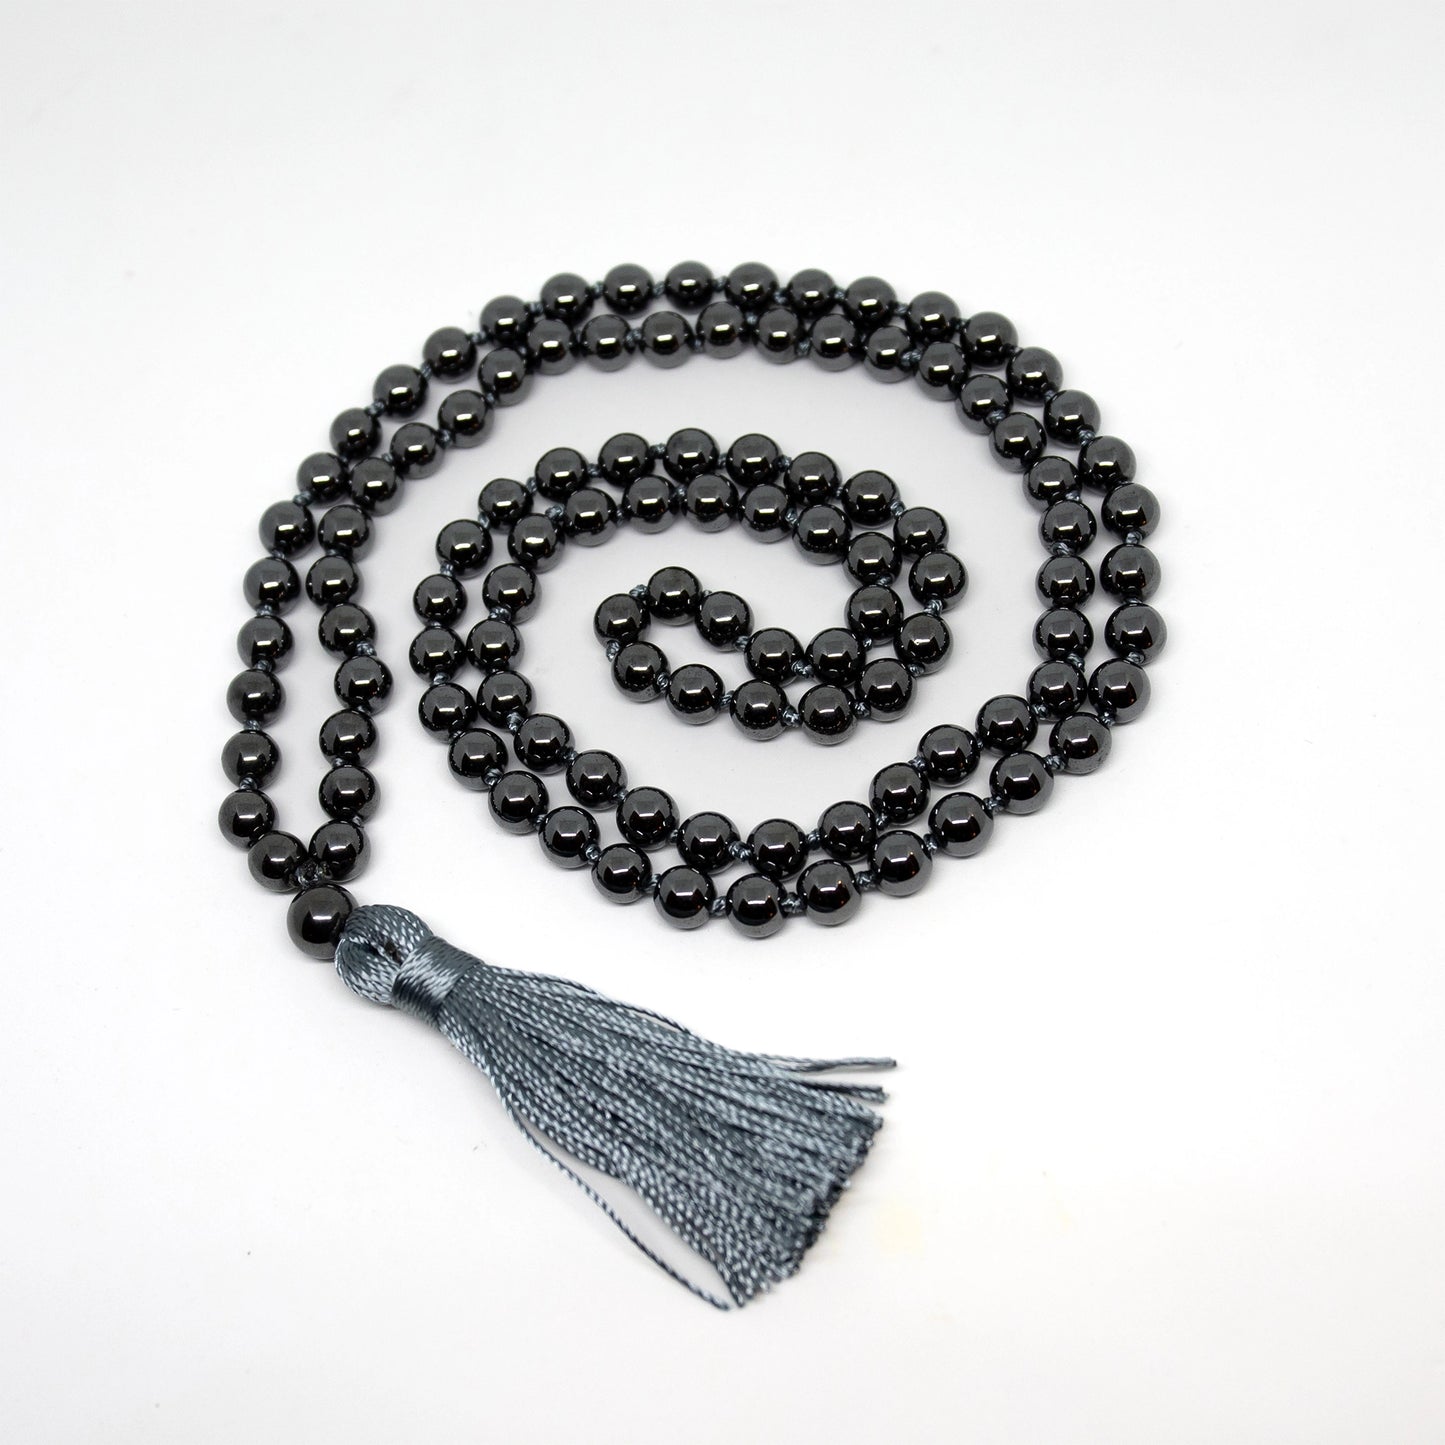 Hematite Knotted 108 Bead Mala - Prayer Beads - 8mm (1 Pack)